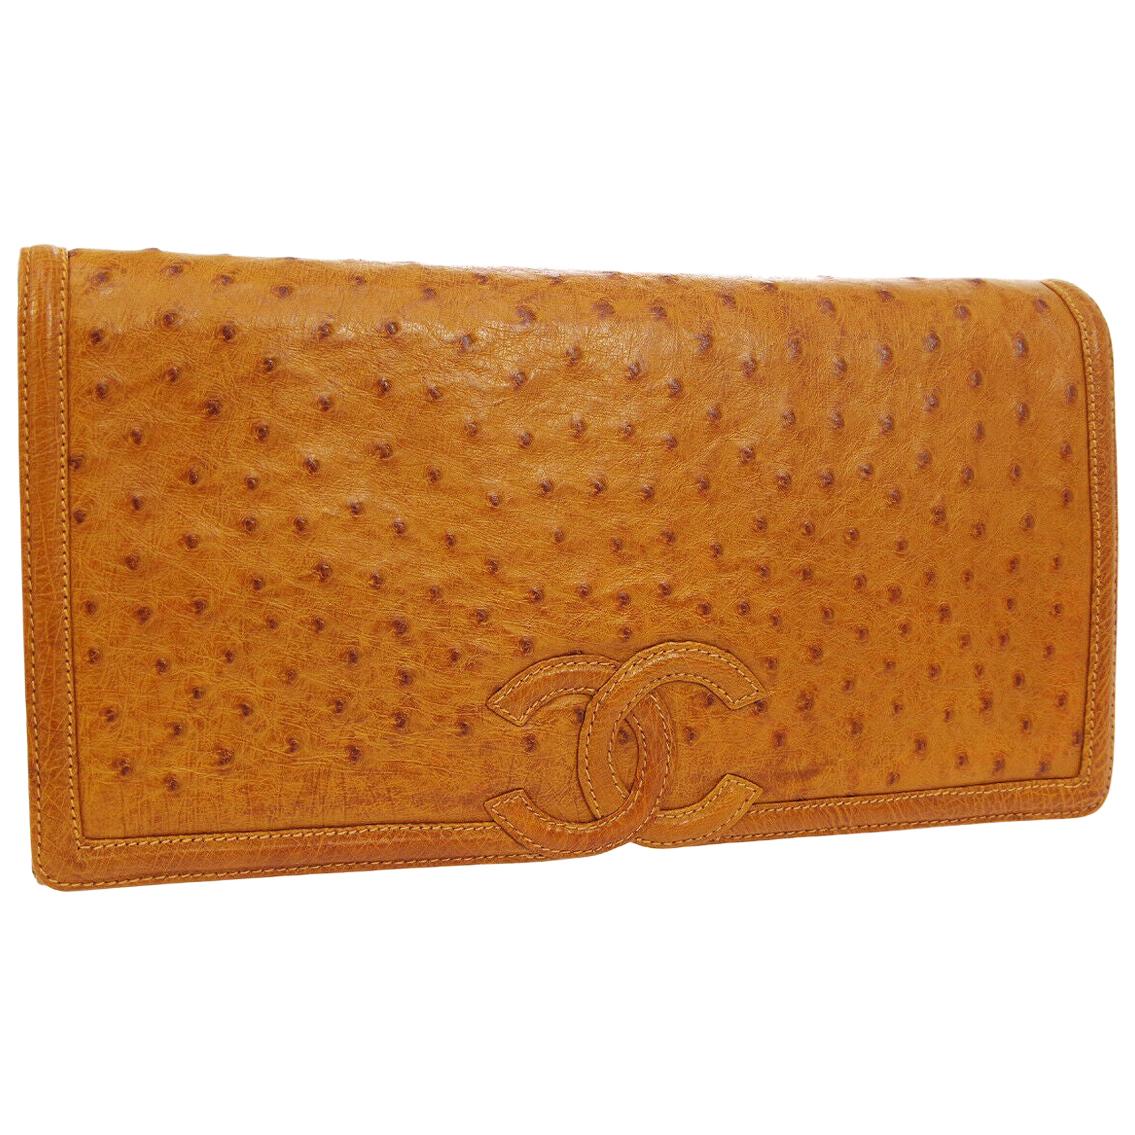 Chanel Cognac Ostrich Exotic Skin Leather Envelope Evening Wallet Clutch Bag